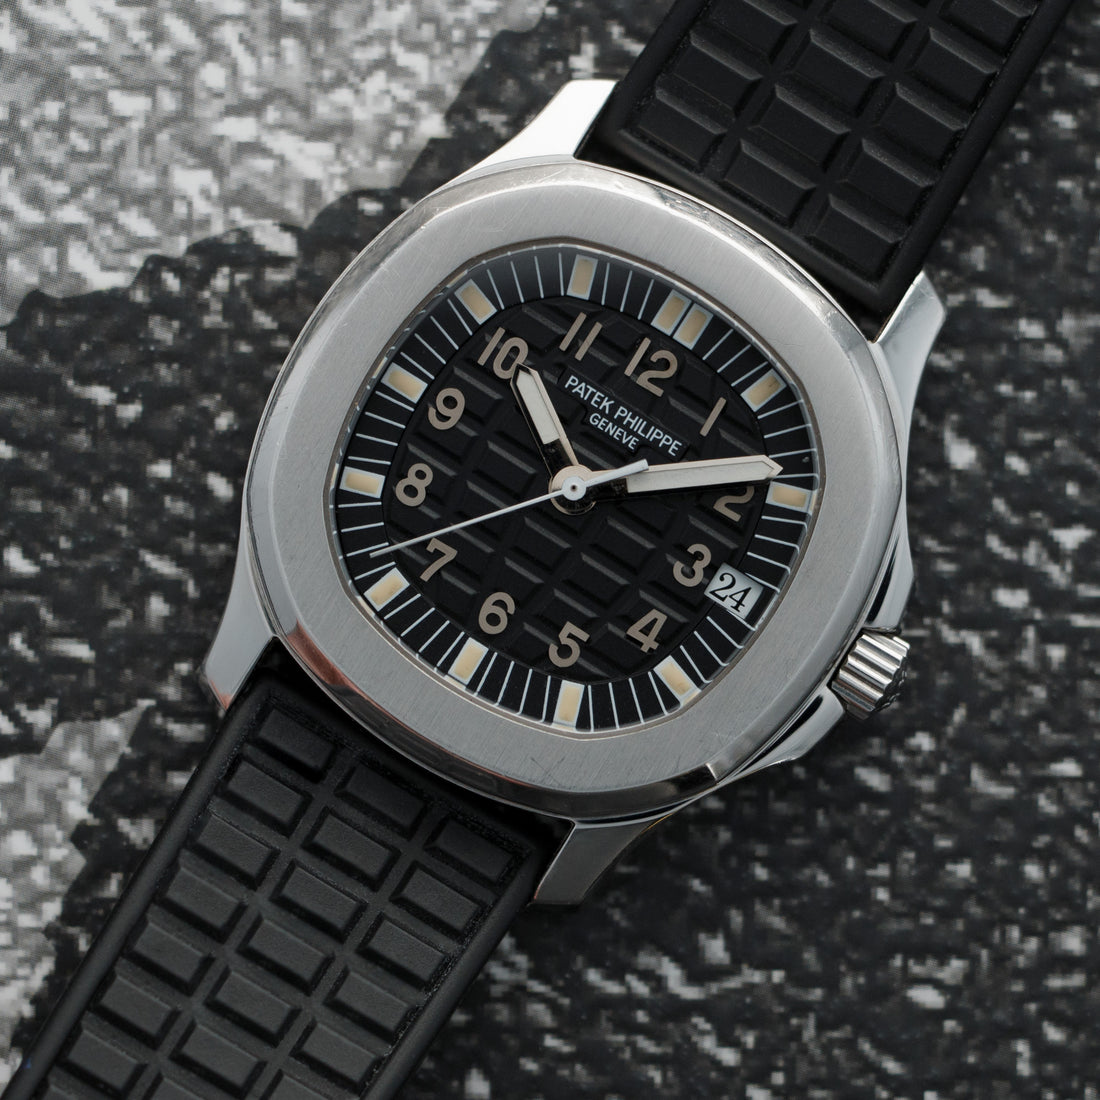 Patek Philippe Aquanaut Automatic Watch Ref. 5060, First Series Aquanaut